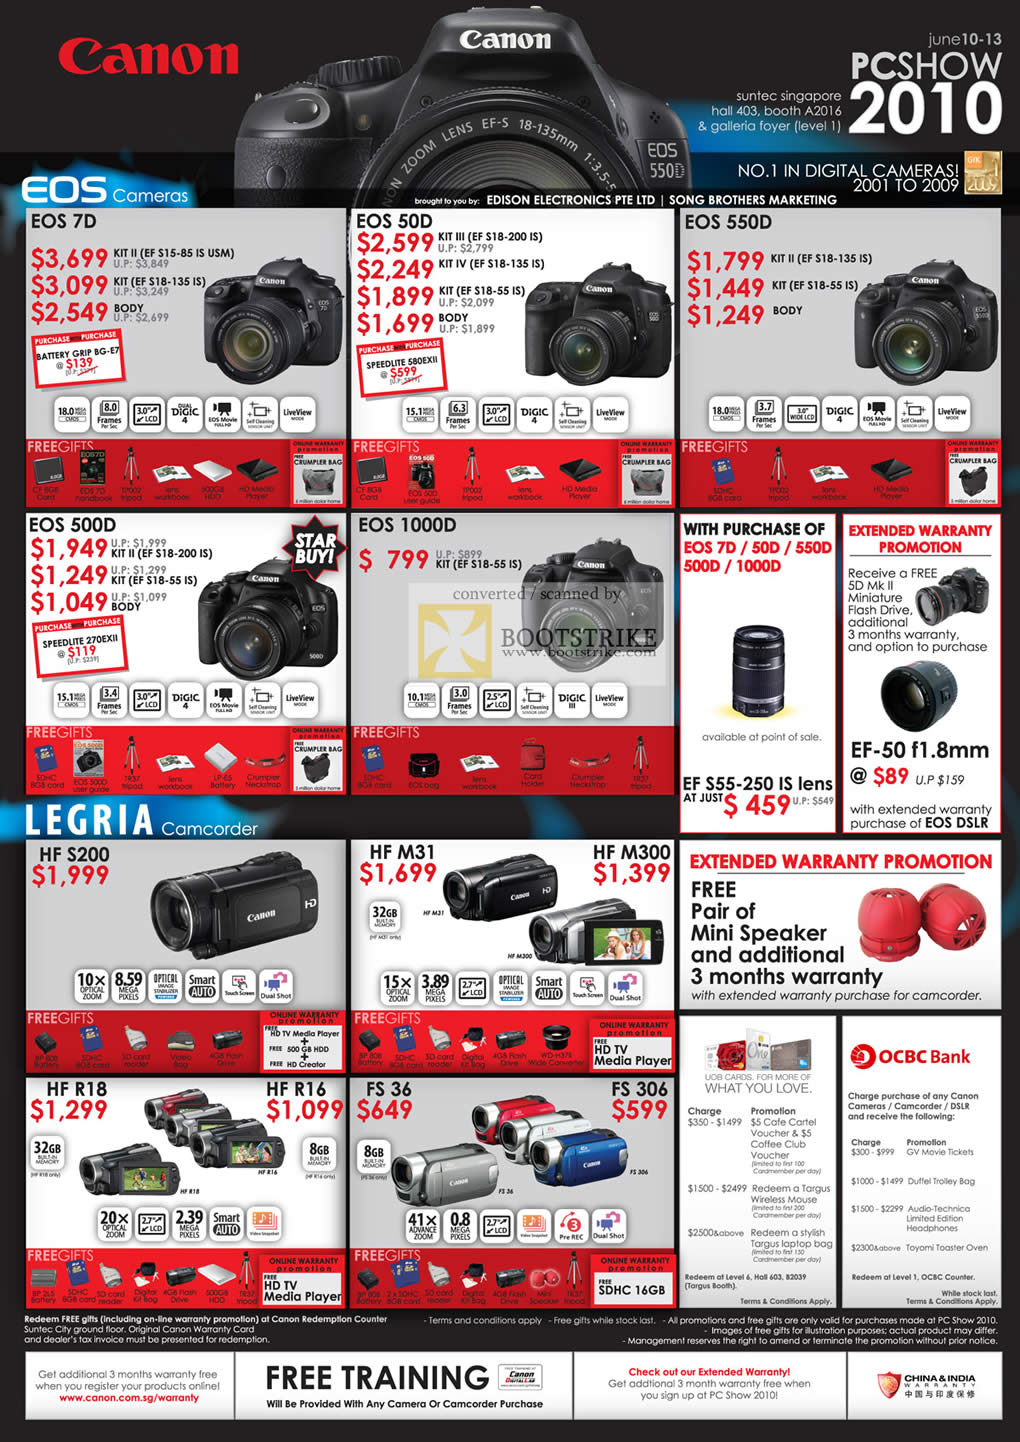 PC Show 2010 price list image brochure of Canon Digital Cameras DSLR EOS 7D 50D 550D 500D 1000D Legria Camcorder HFS200 HF M31 HF R18 FS 36